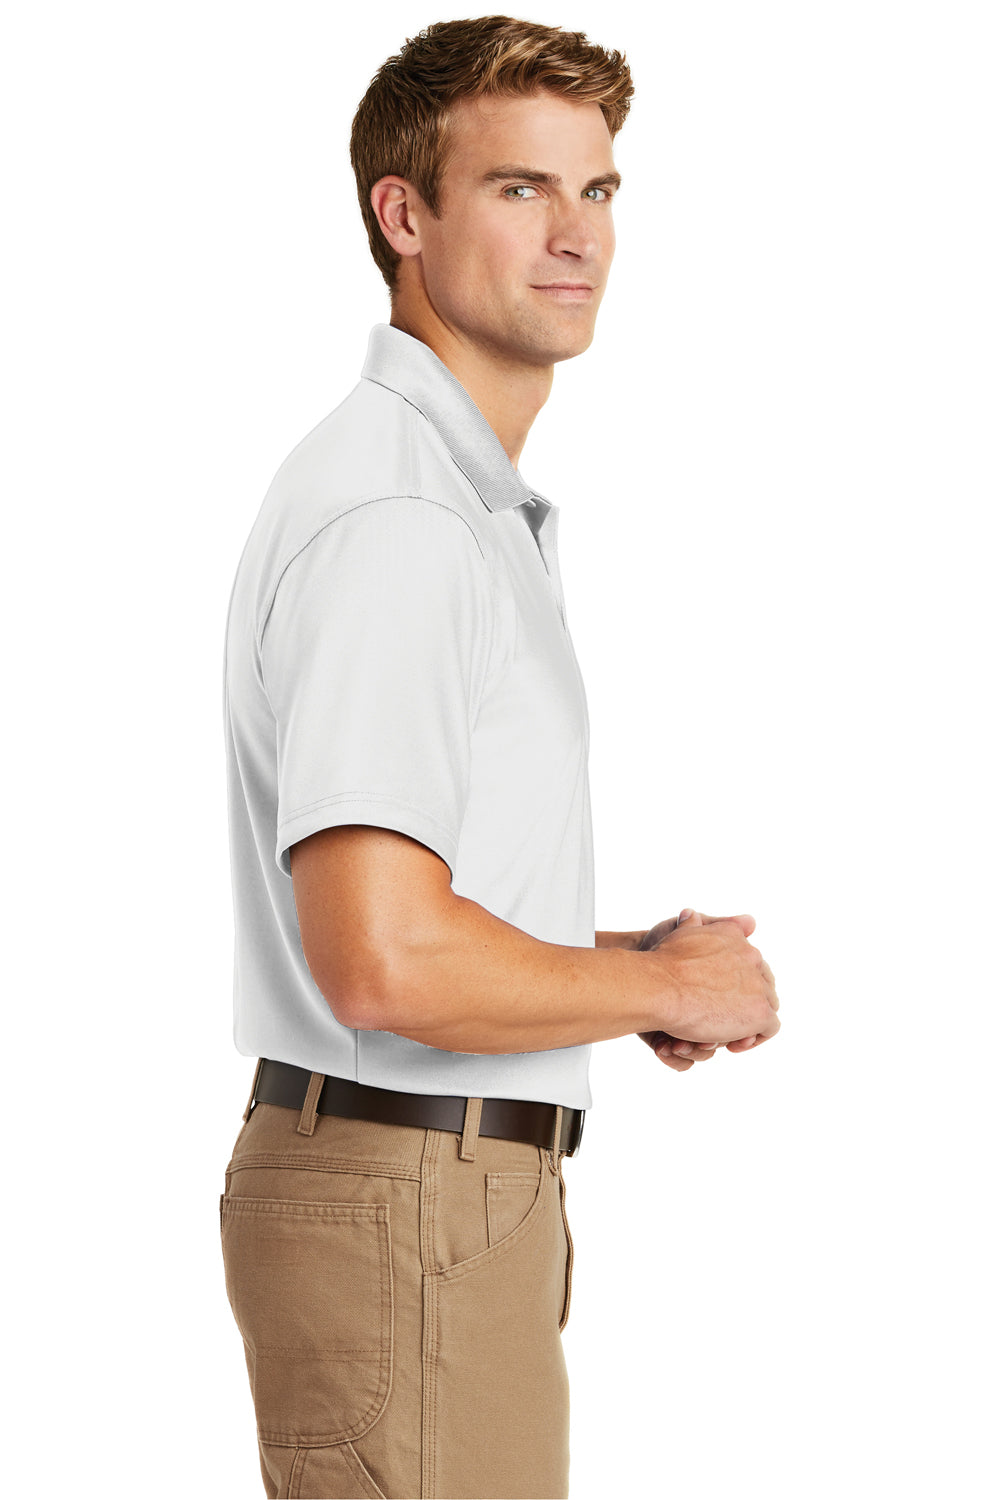 CornerStone CS412 Mens Select Moisture Wicking Short Sleeve Polo Shirt White Side